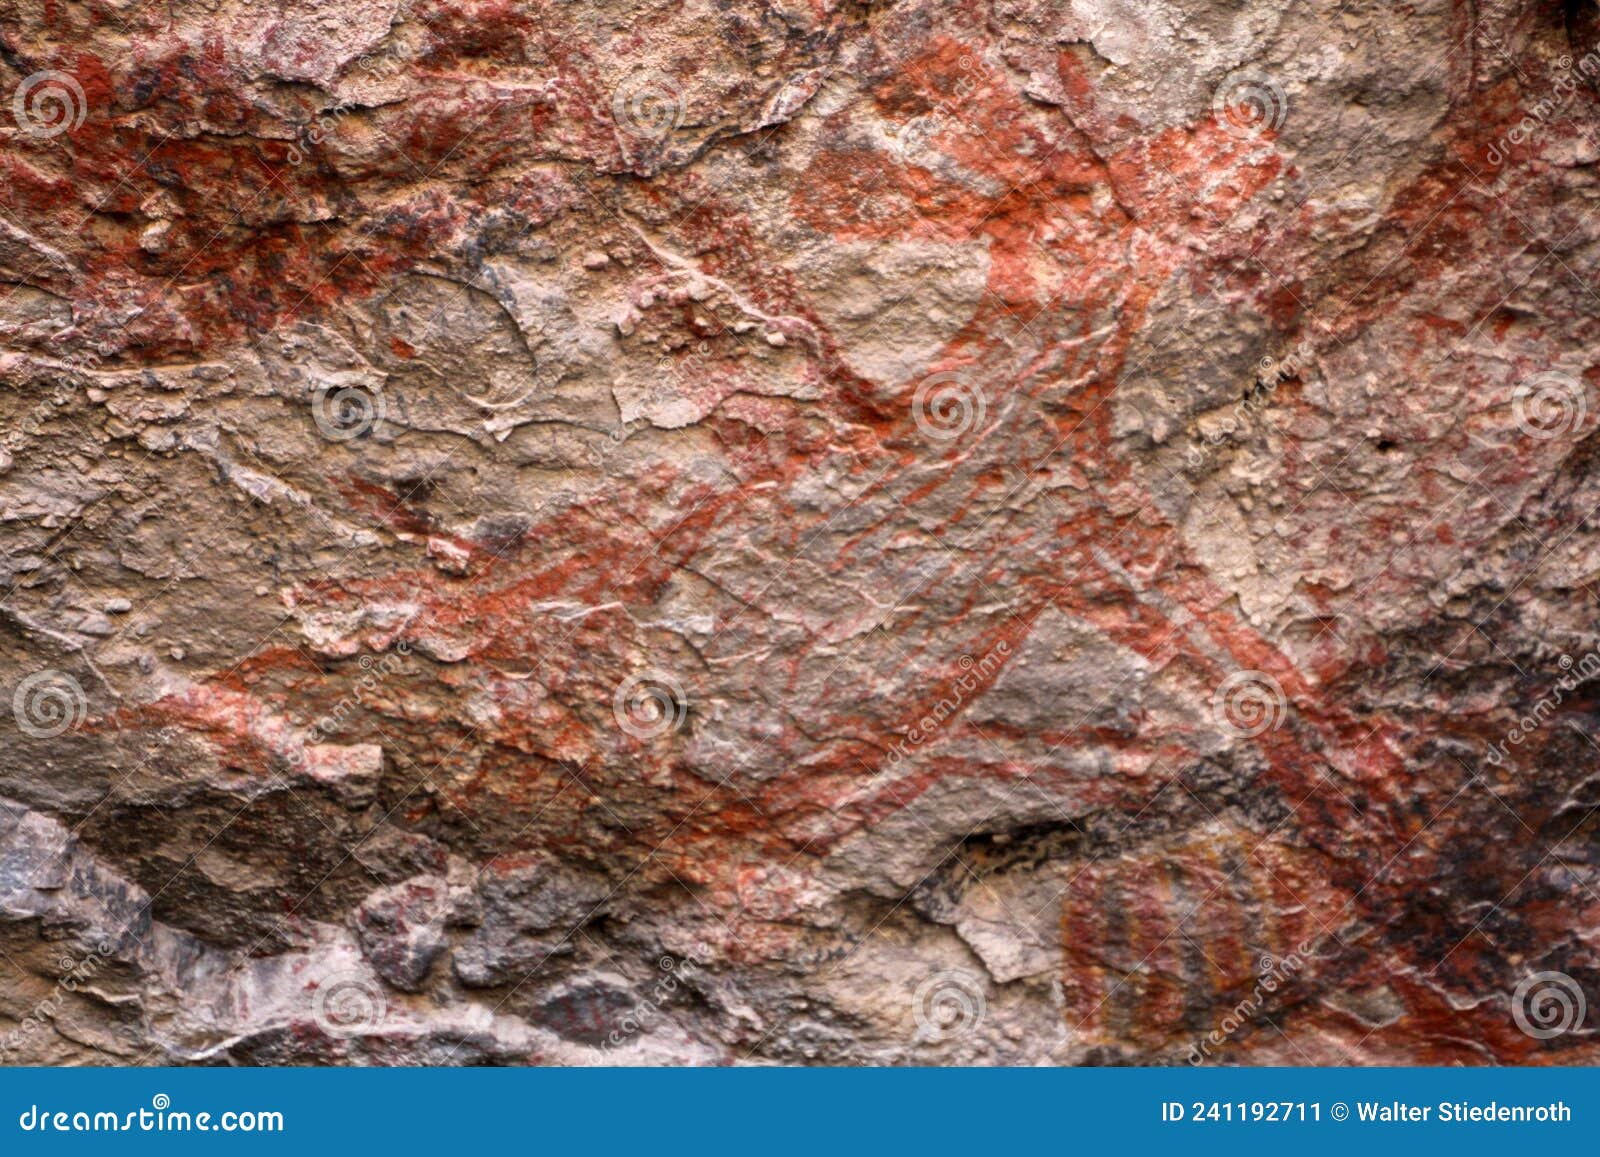 cave paintings in loreto cueva del raton, baja california sur, mexico